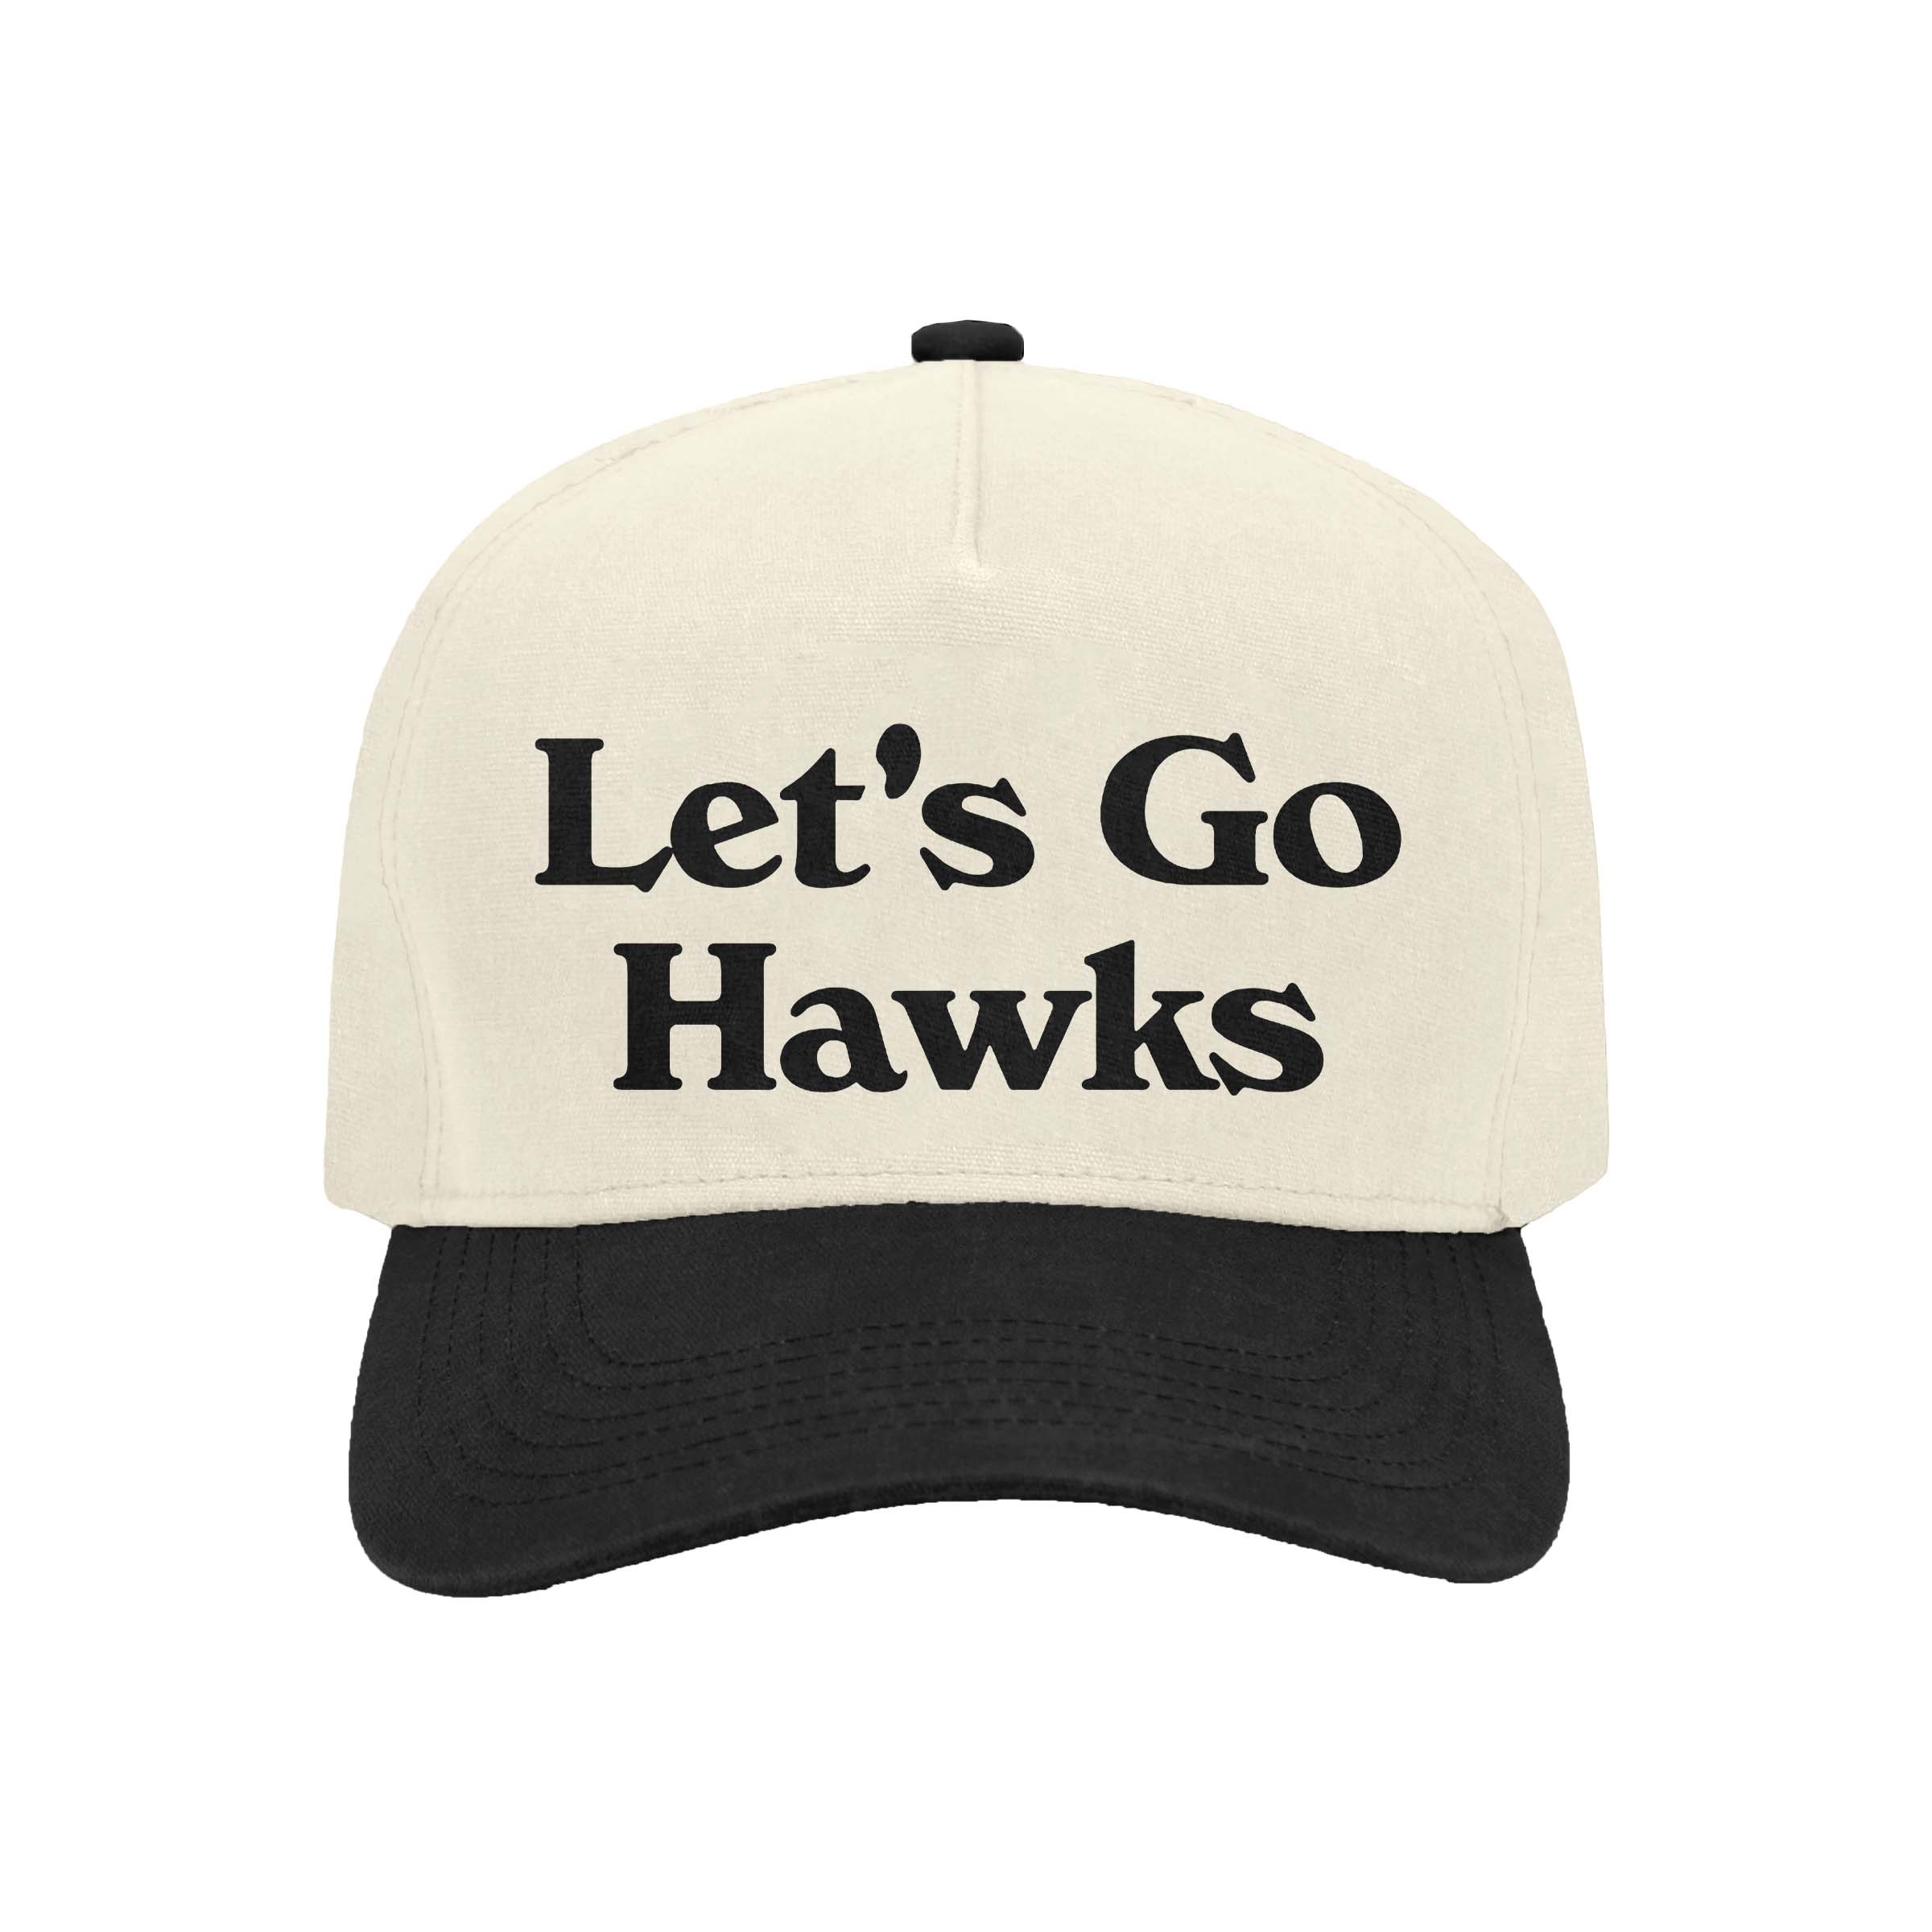 Let's Go Hawks Hat - Black